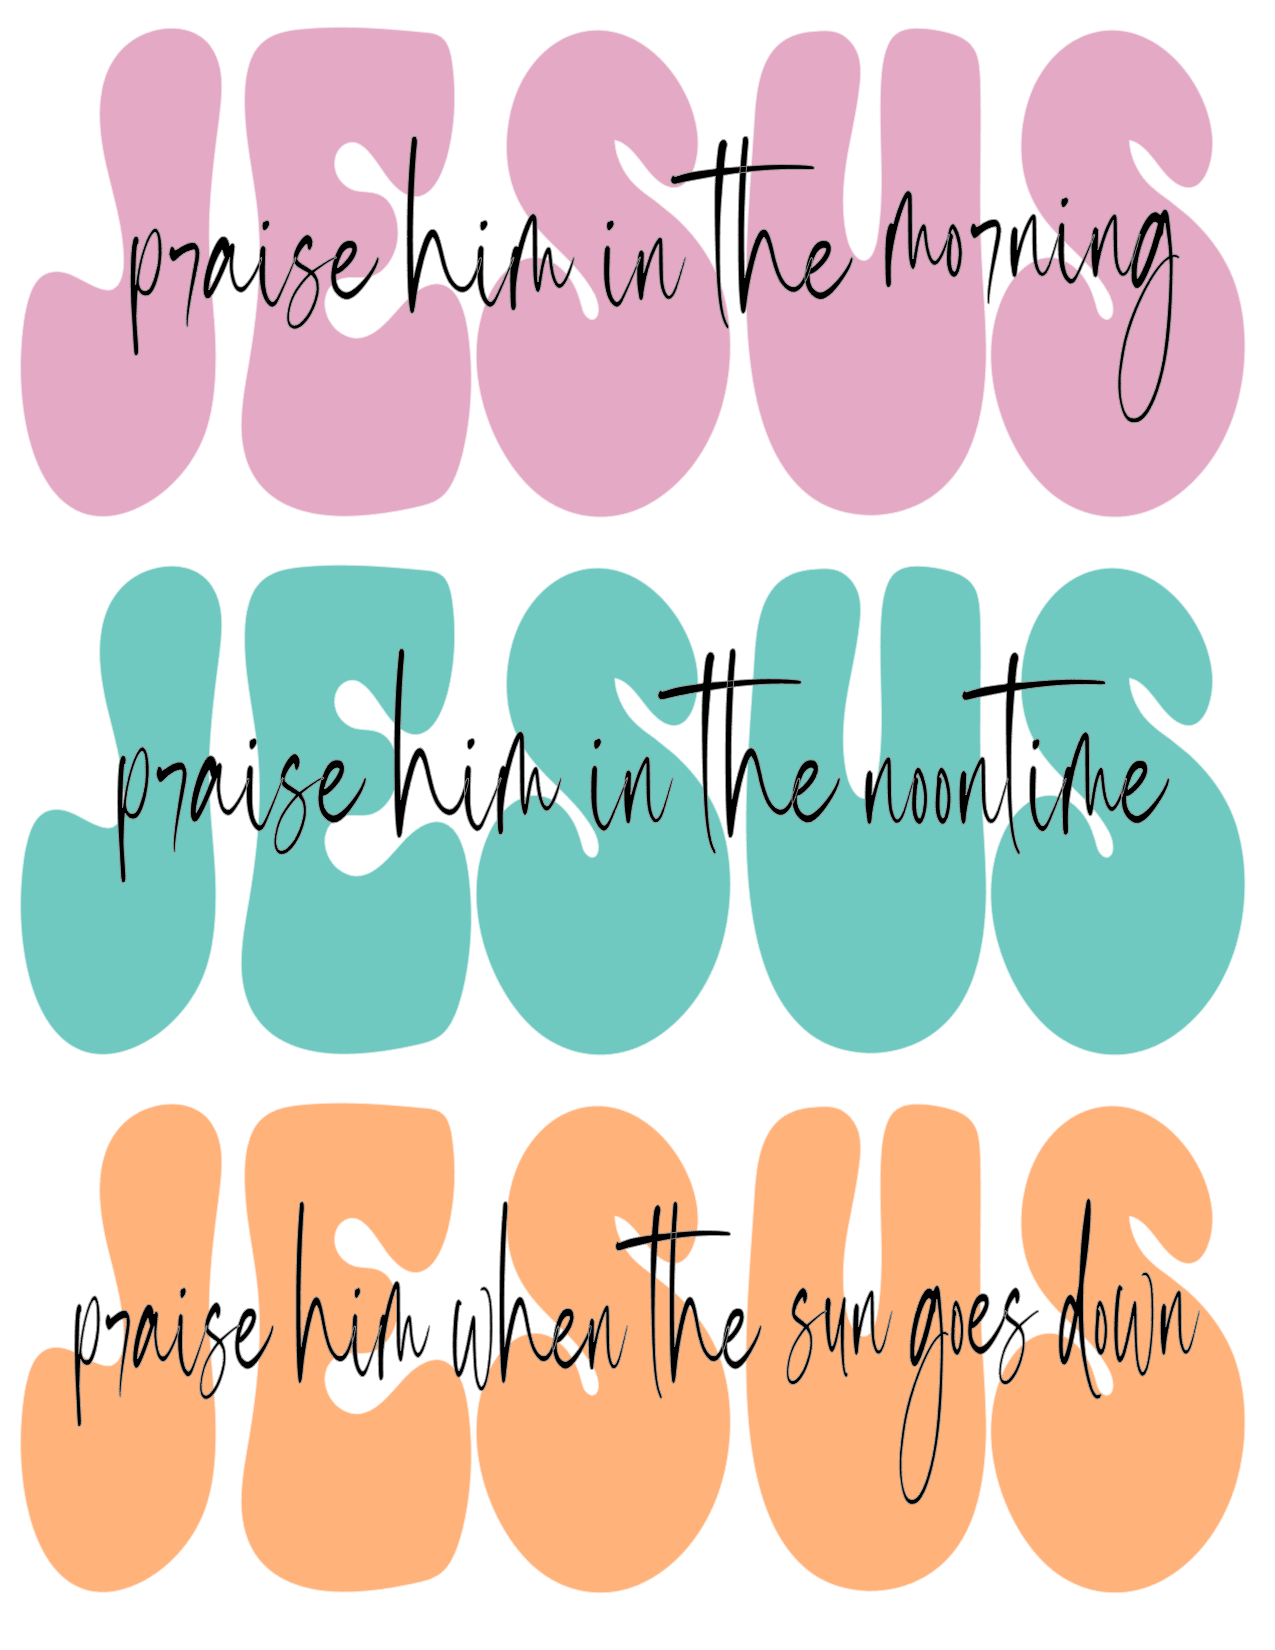 #189 JESUS praise him in the morning JESUS praise him in the noontime JESUS praise him when the sun goes down